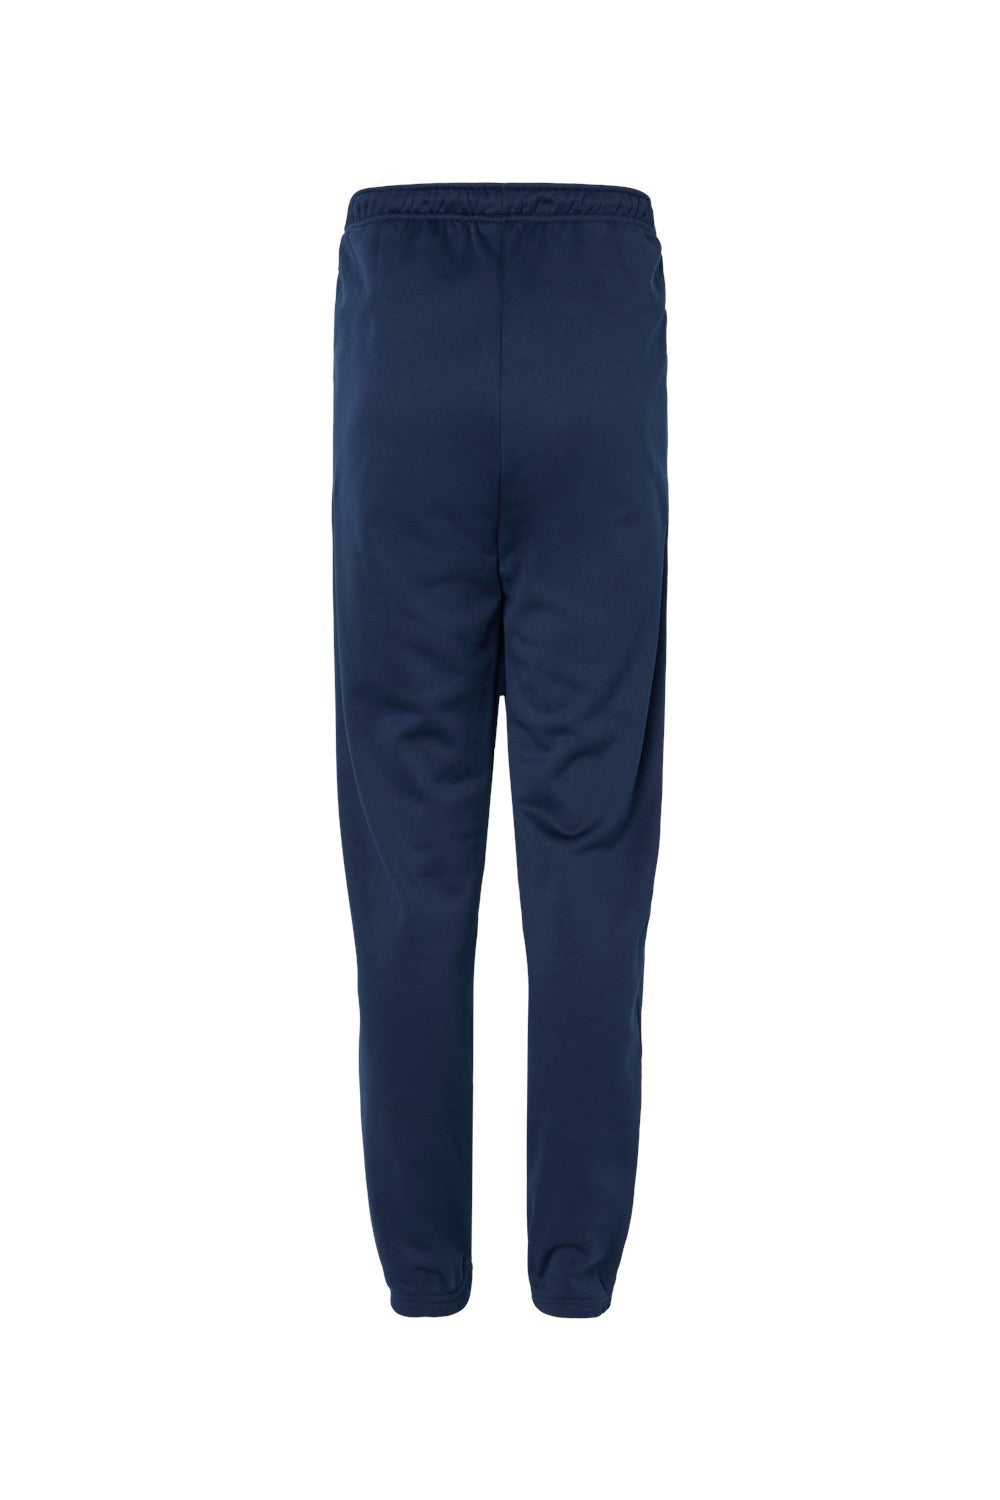 Oakley FOA402996 Mens Team Issue Enduro Hydrolix Sweatpants w/ Pockets Team Navy Blue Flat Back